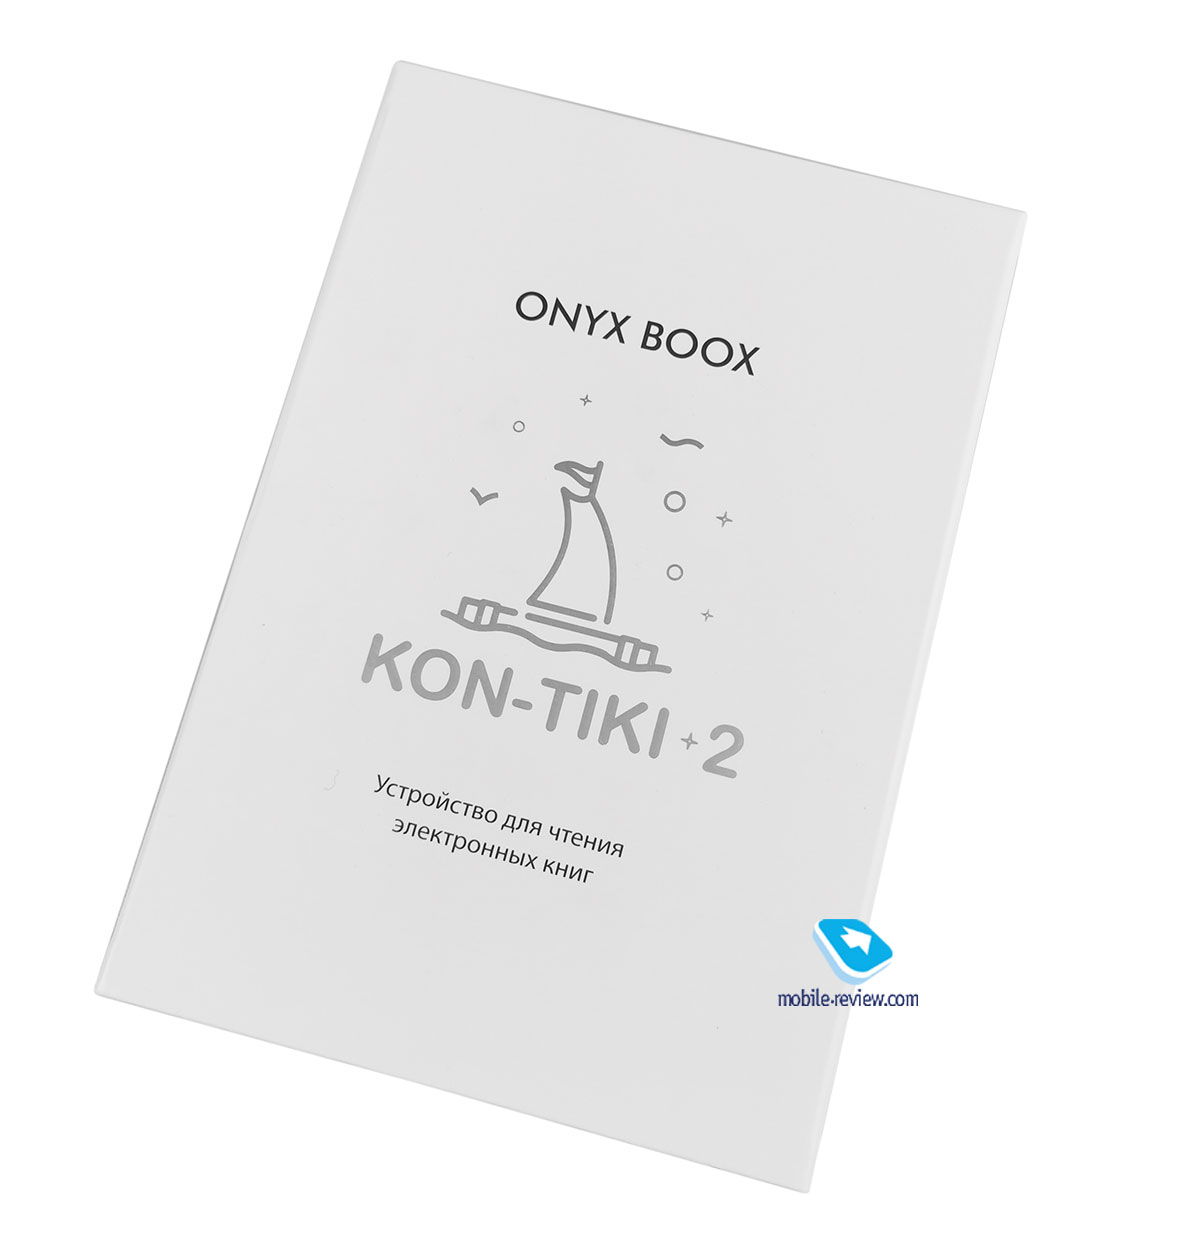    ONYX BOOX Kon-Tiki 2